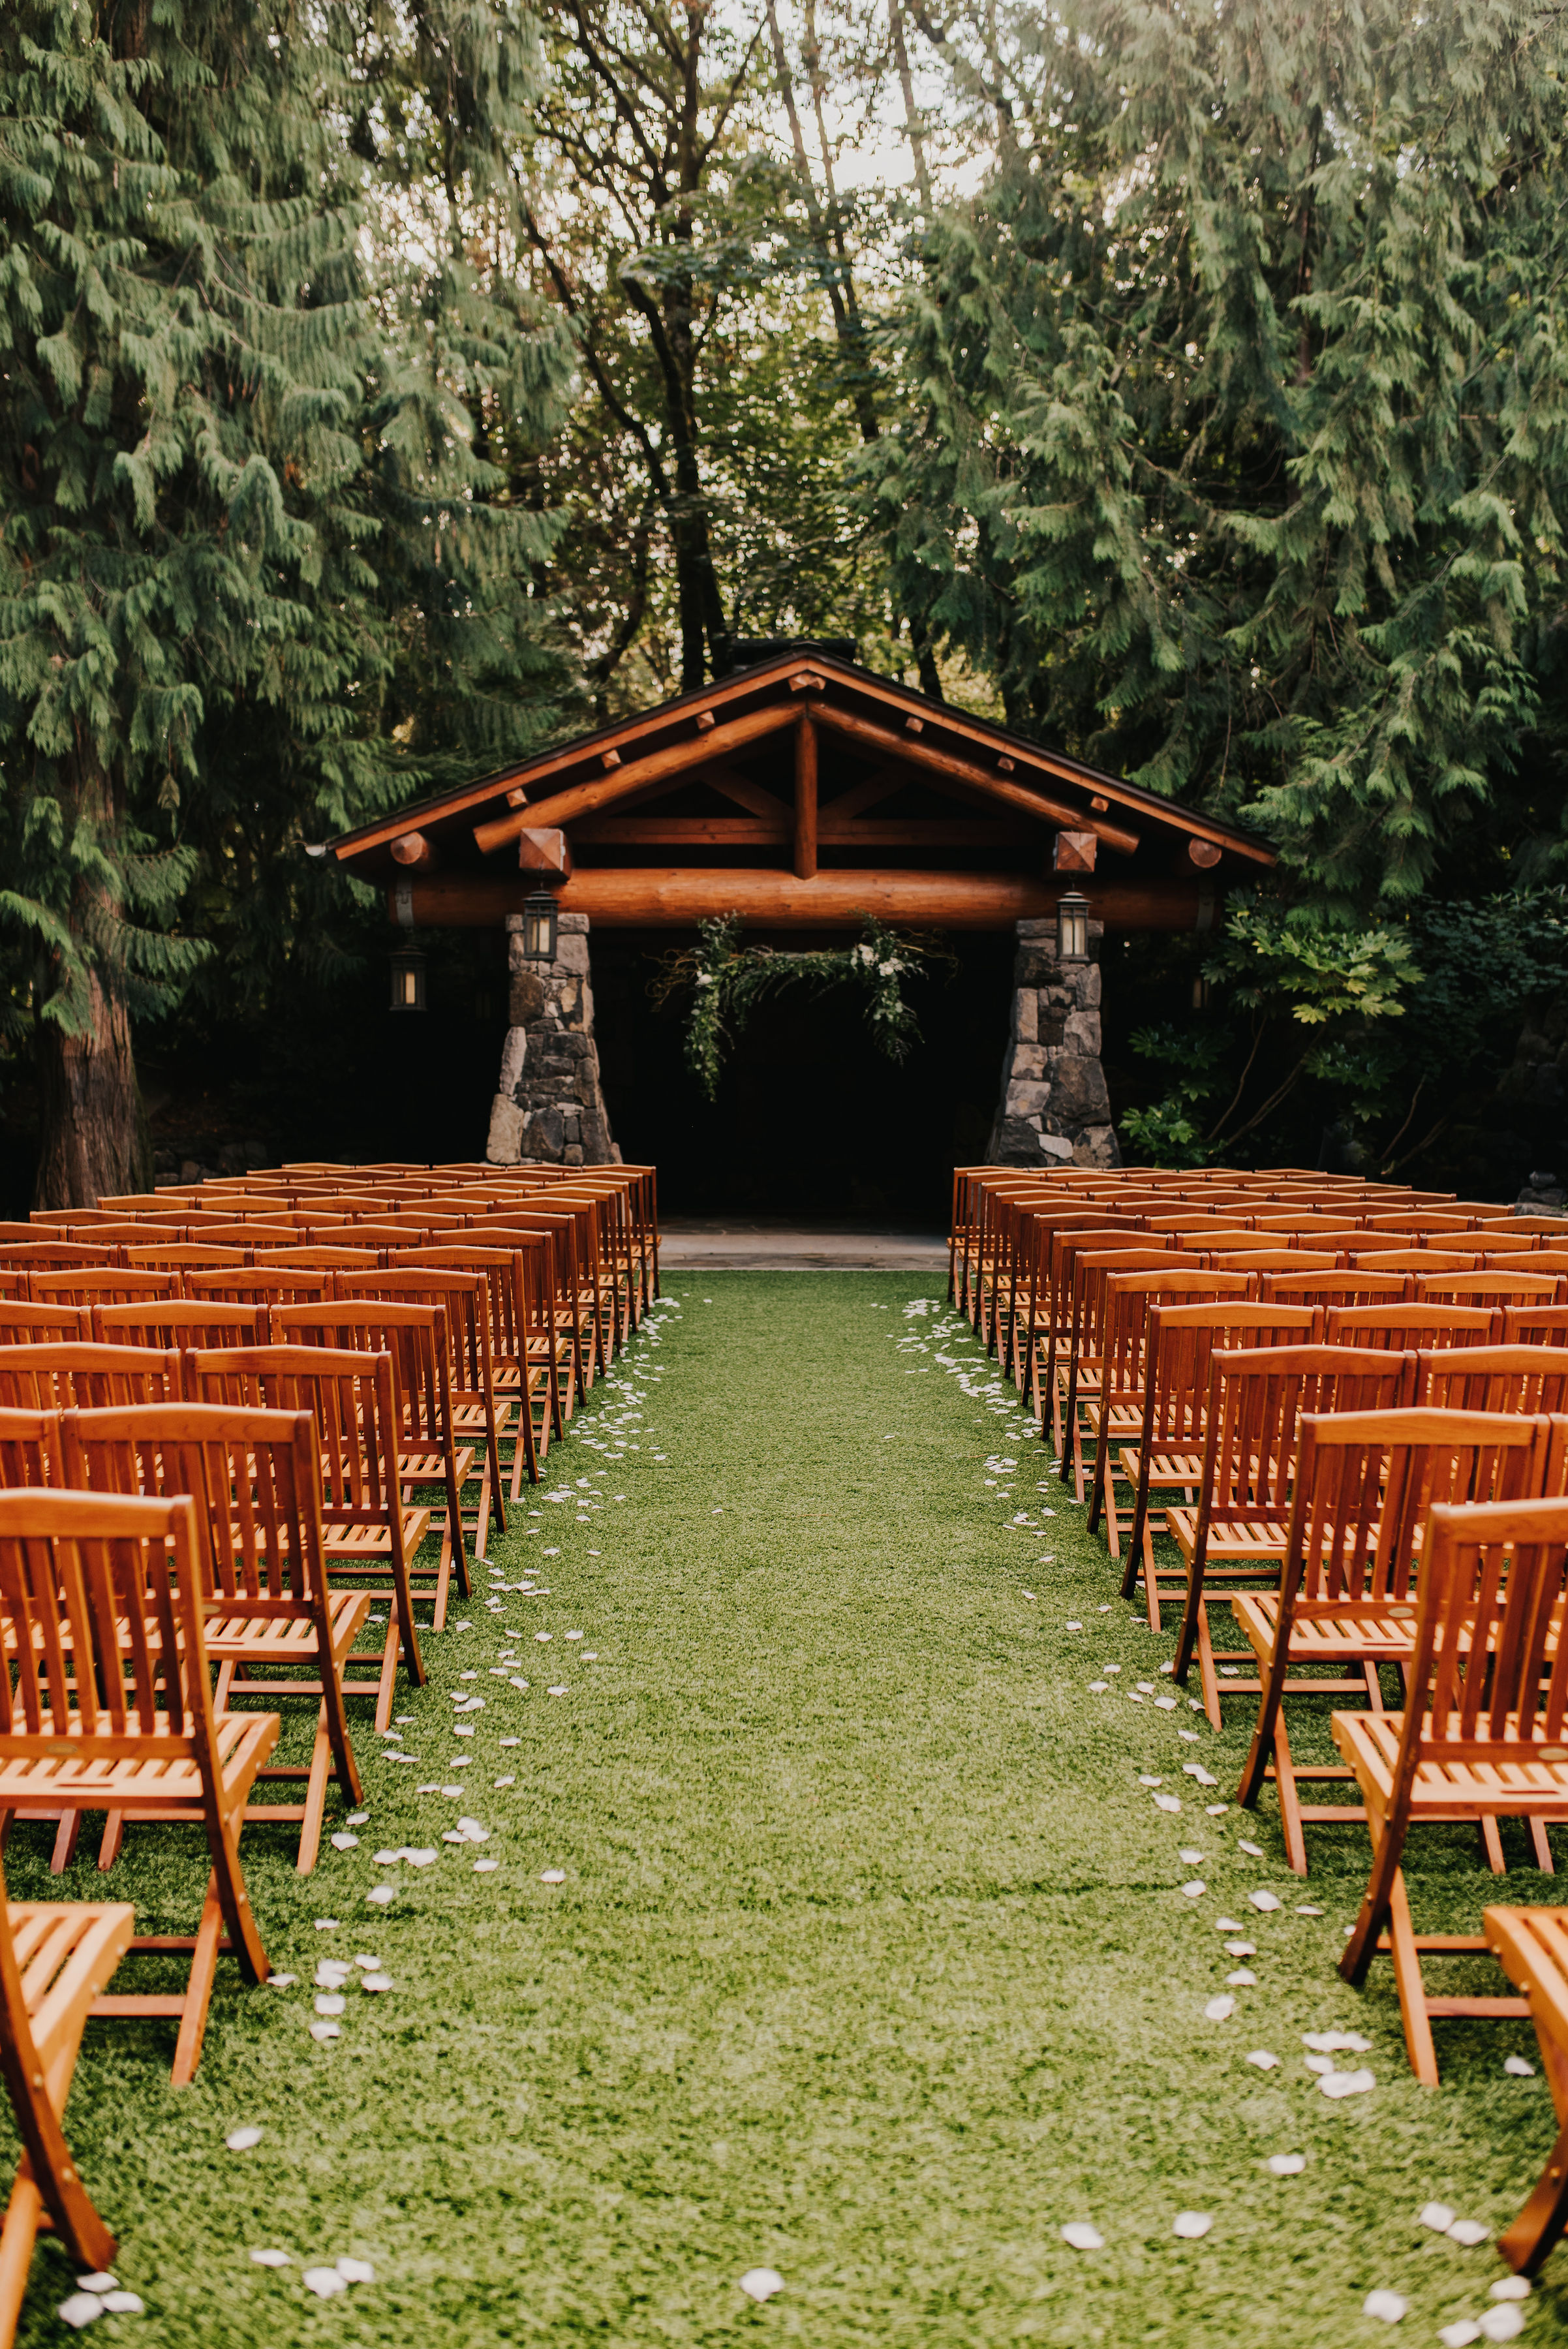 gazebo, outdoor wedding, wedding reception, rustic charm, elegant romantic, wooded, wooden forest wedding